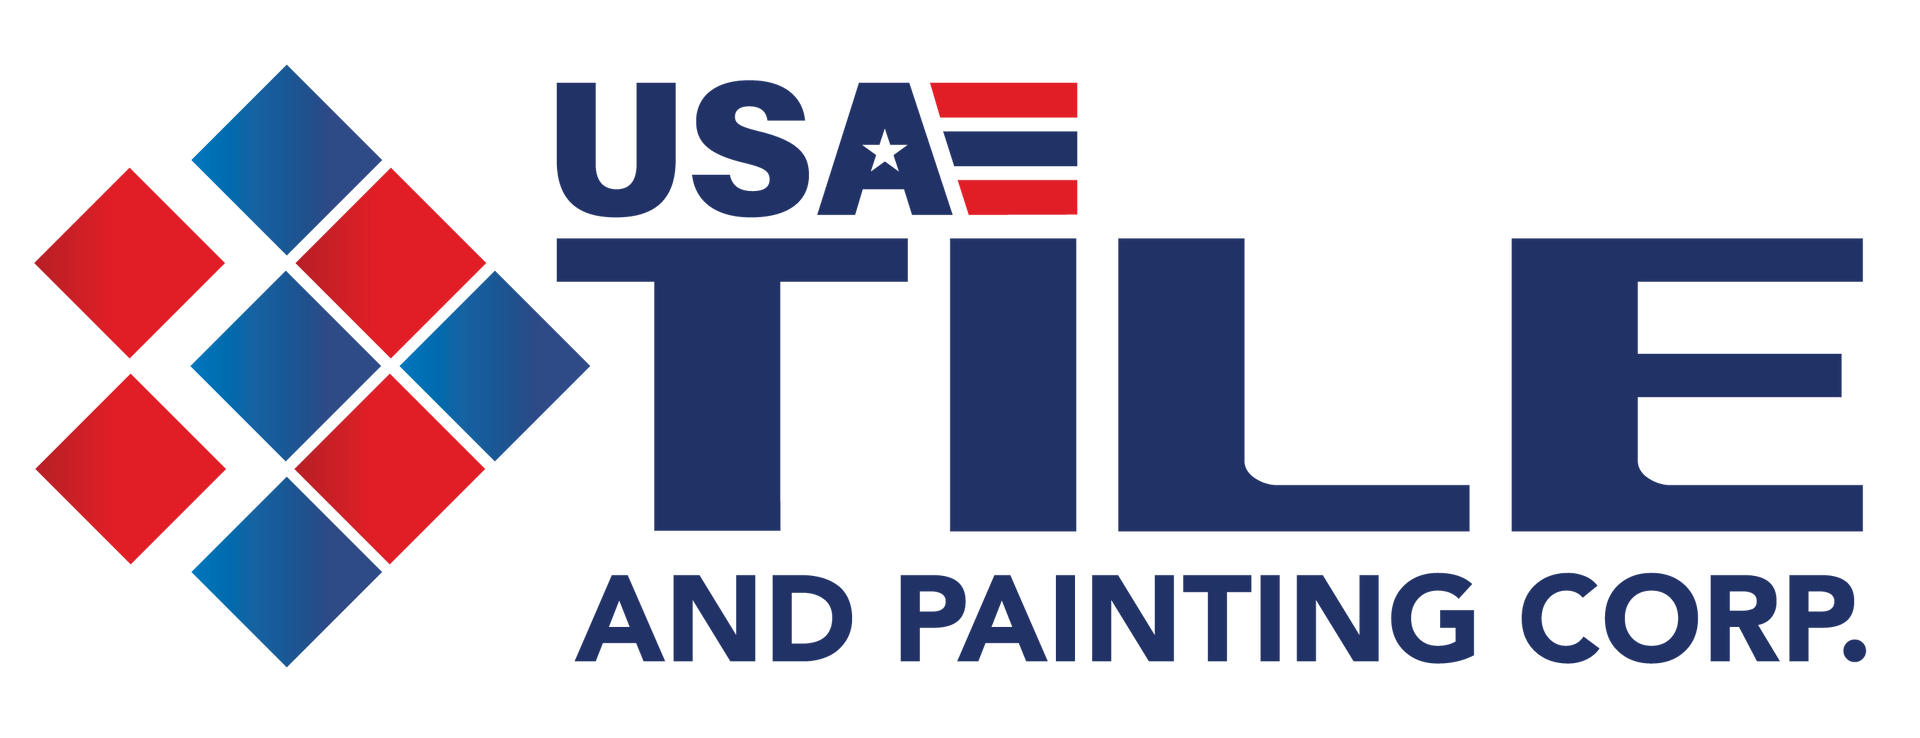 USA Tiles and Painting Corp Logo